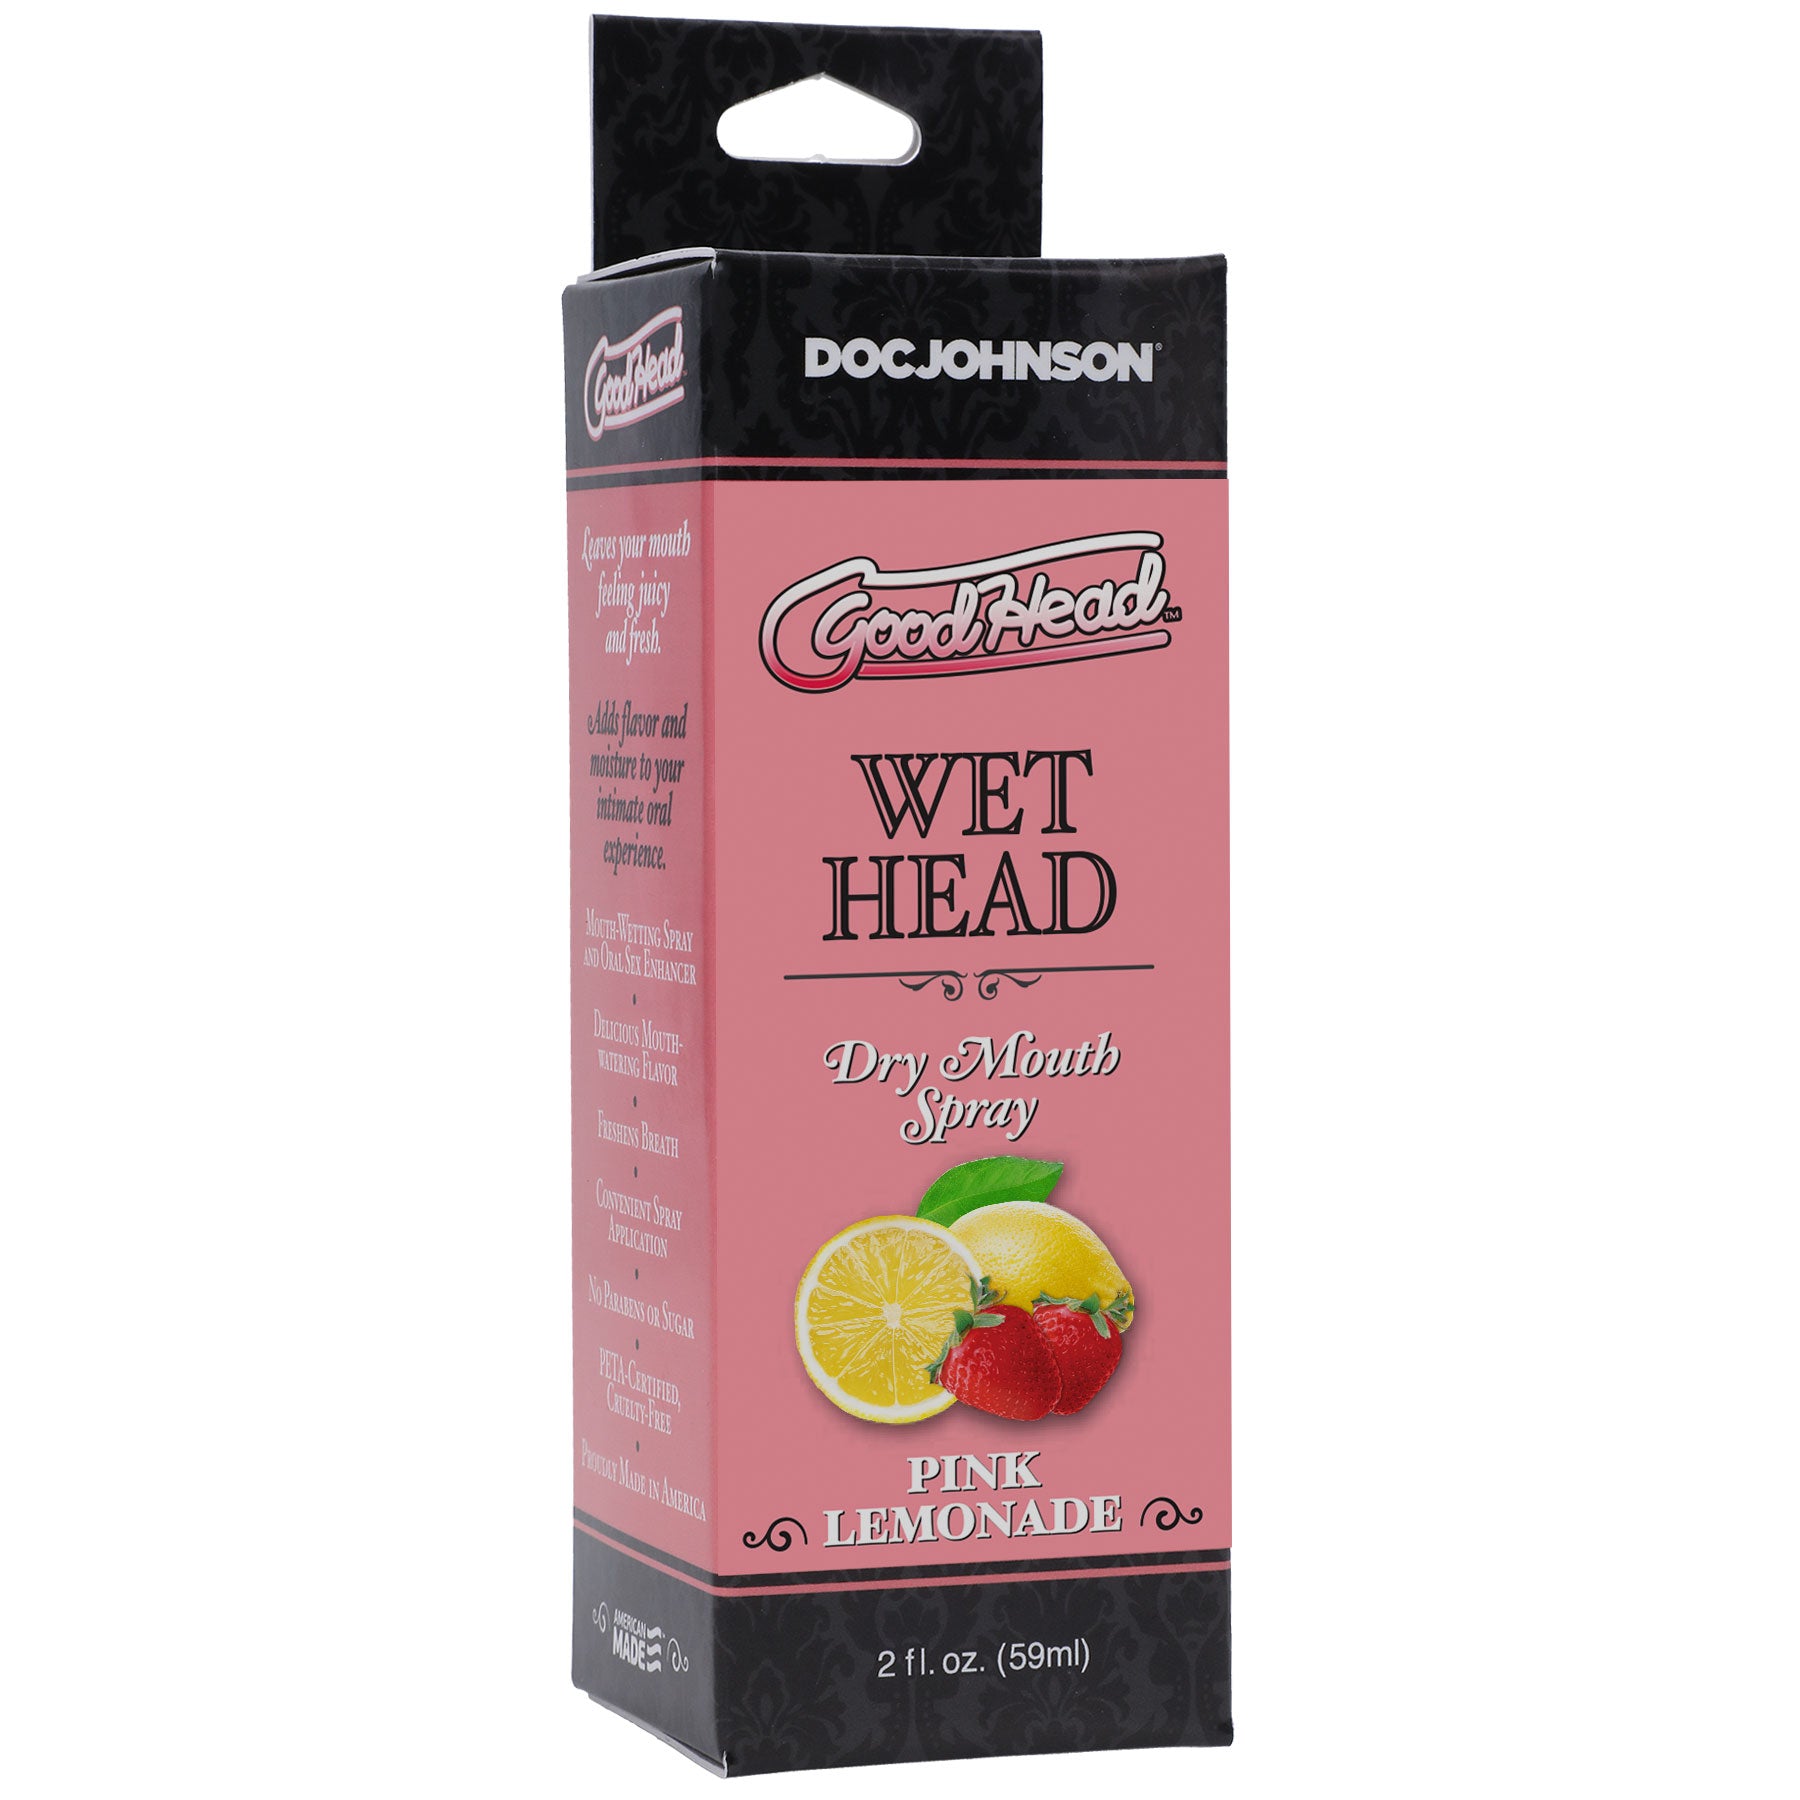 Goodhead - Wet Head - Dry Mouth Spray - Pink  Lemonade - 2 Fl. Oz. (59ml)